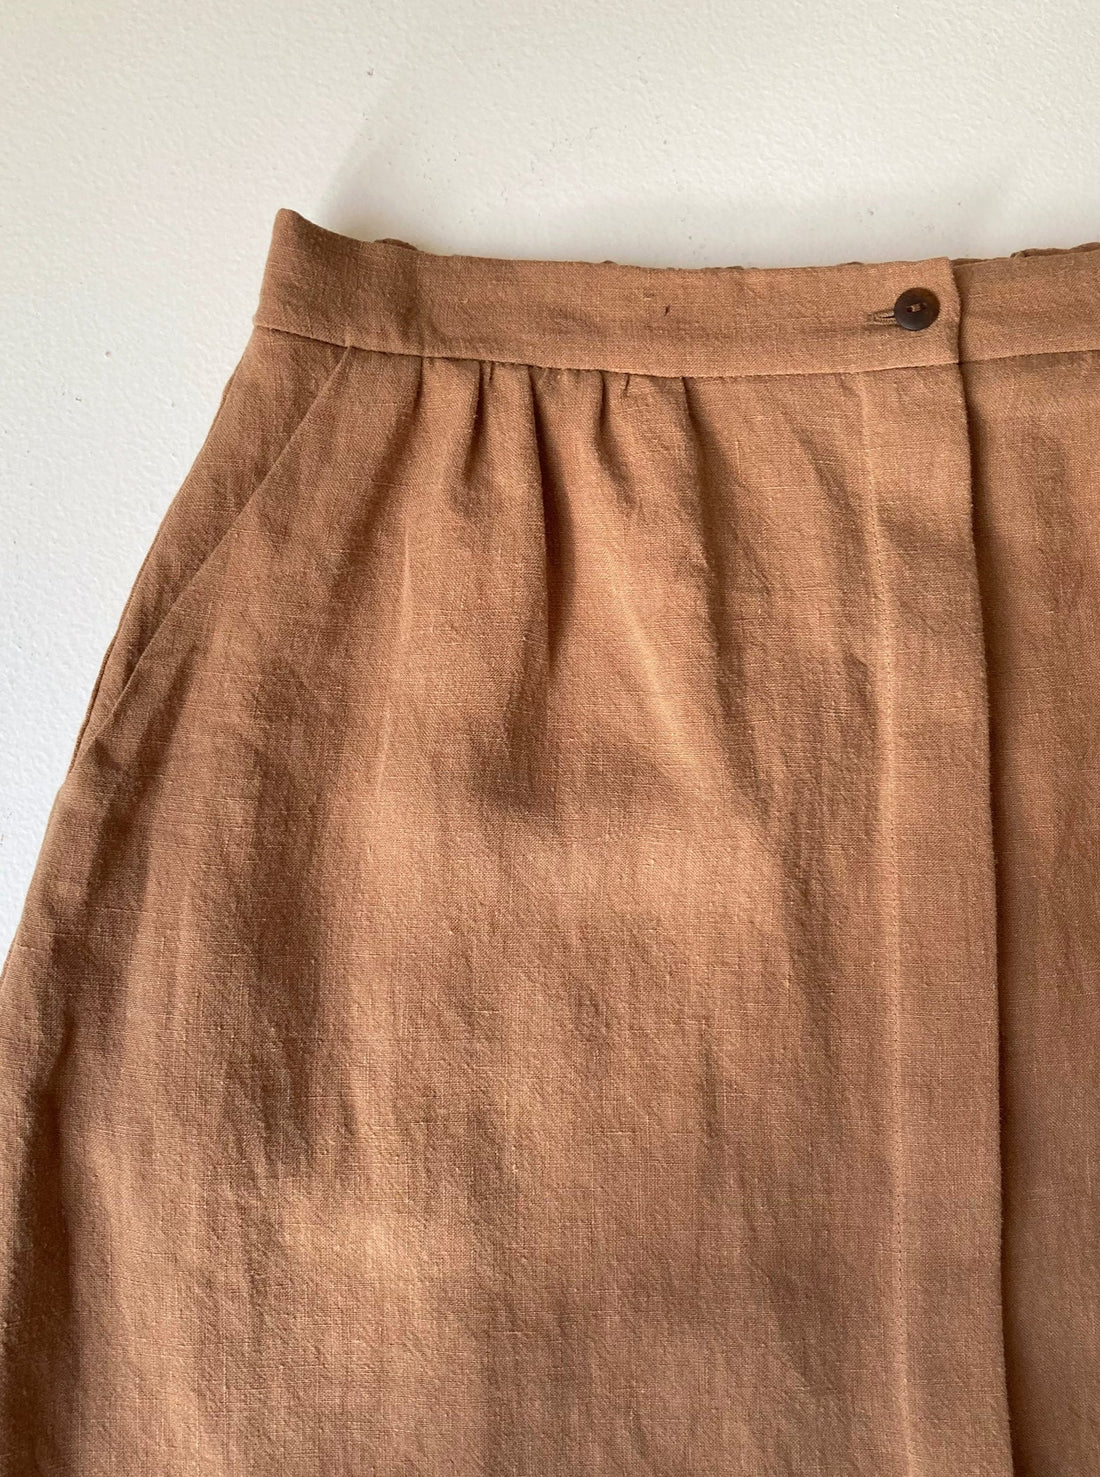 Skirt No2402w, confetti and coffee linen